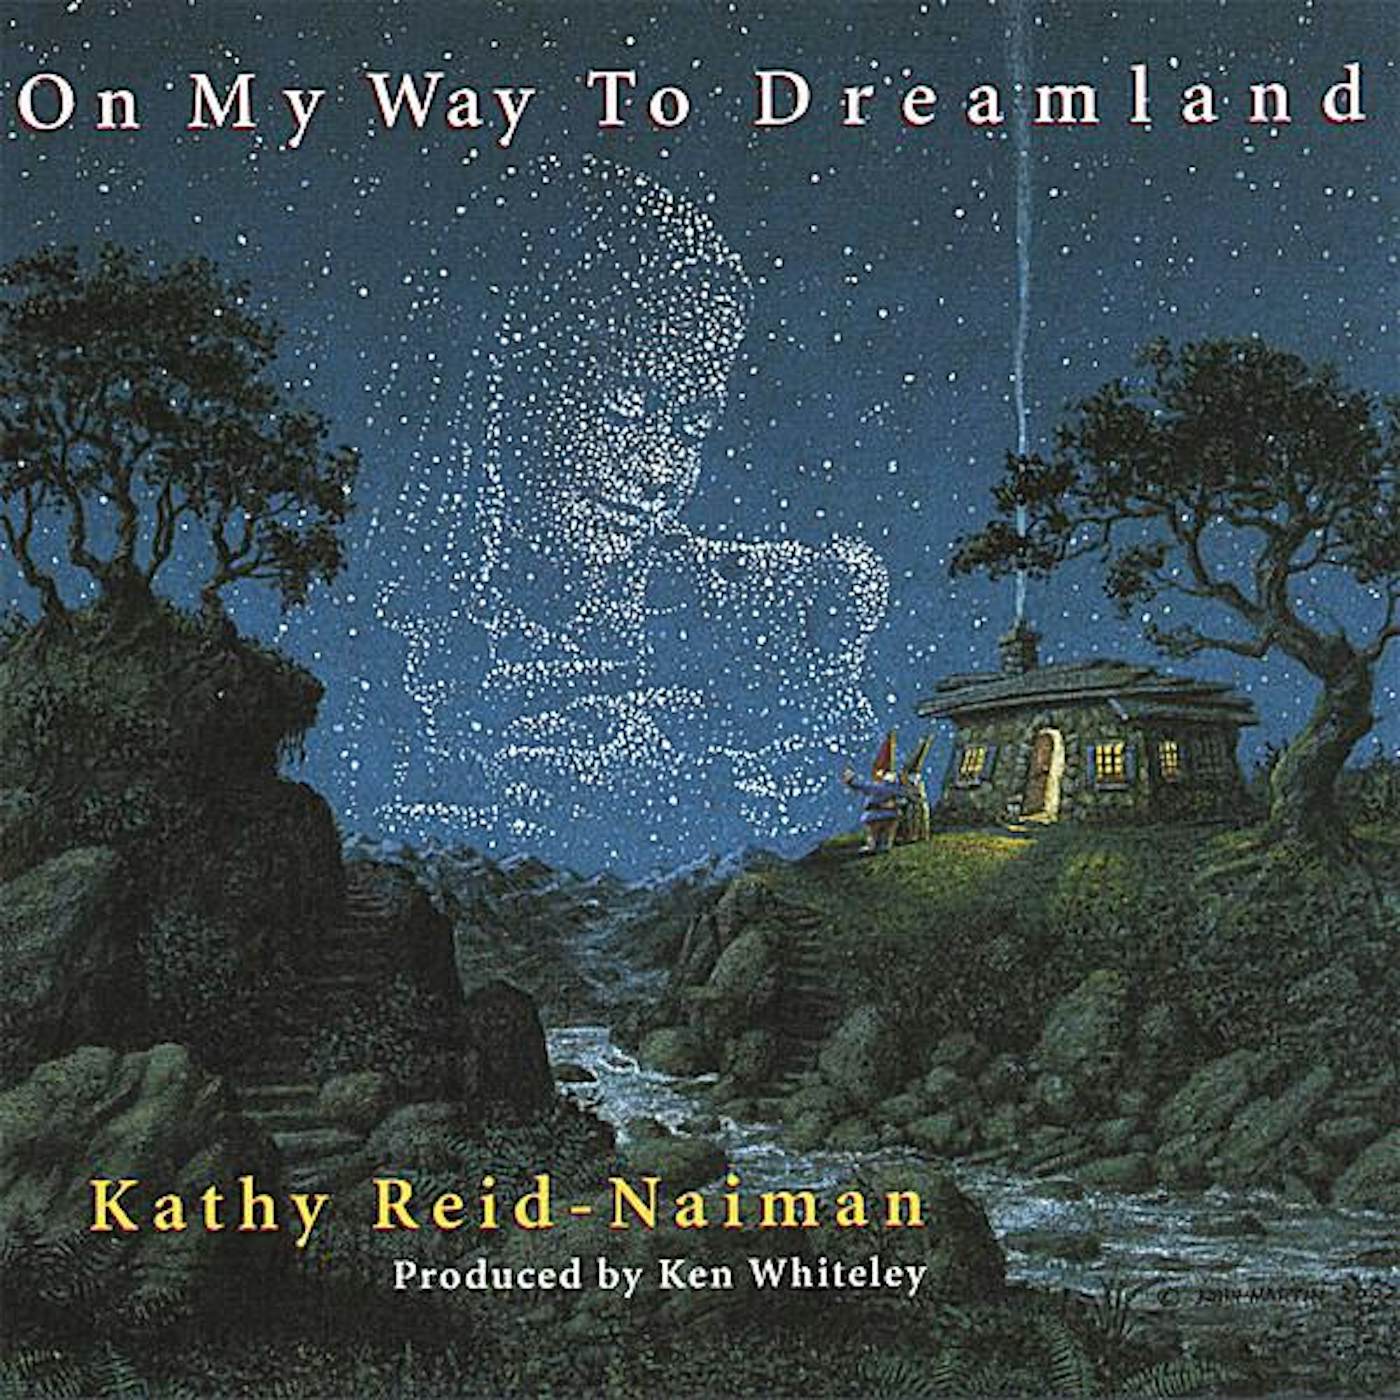 Kathy Reid-Naiman ON MY WAY TO DREAMLAND CD